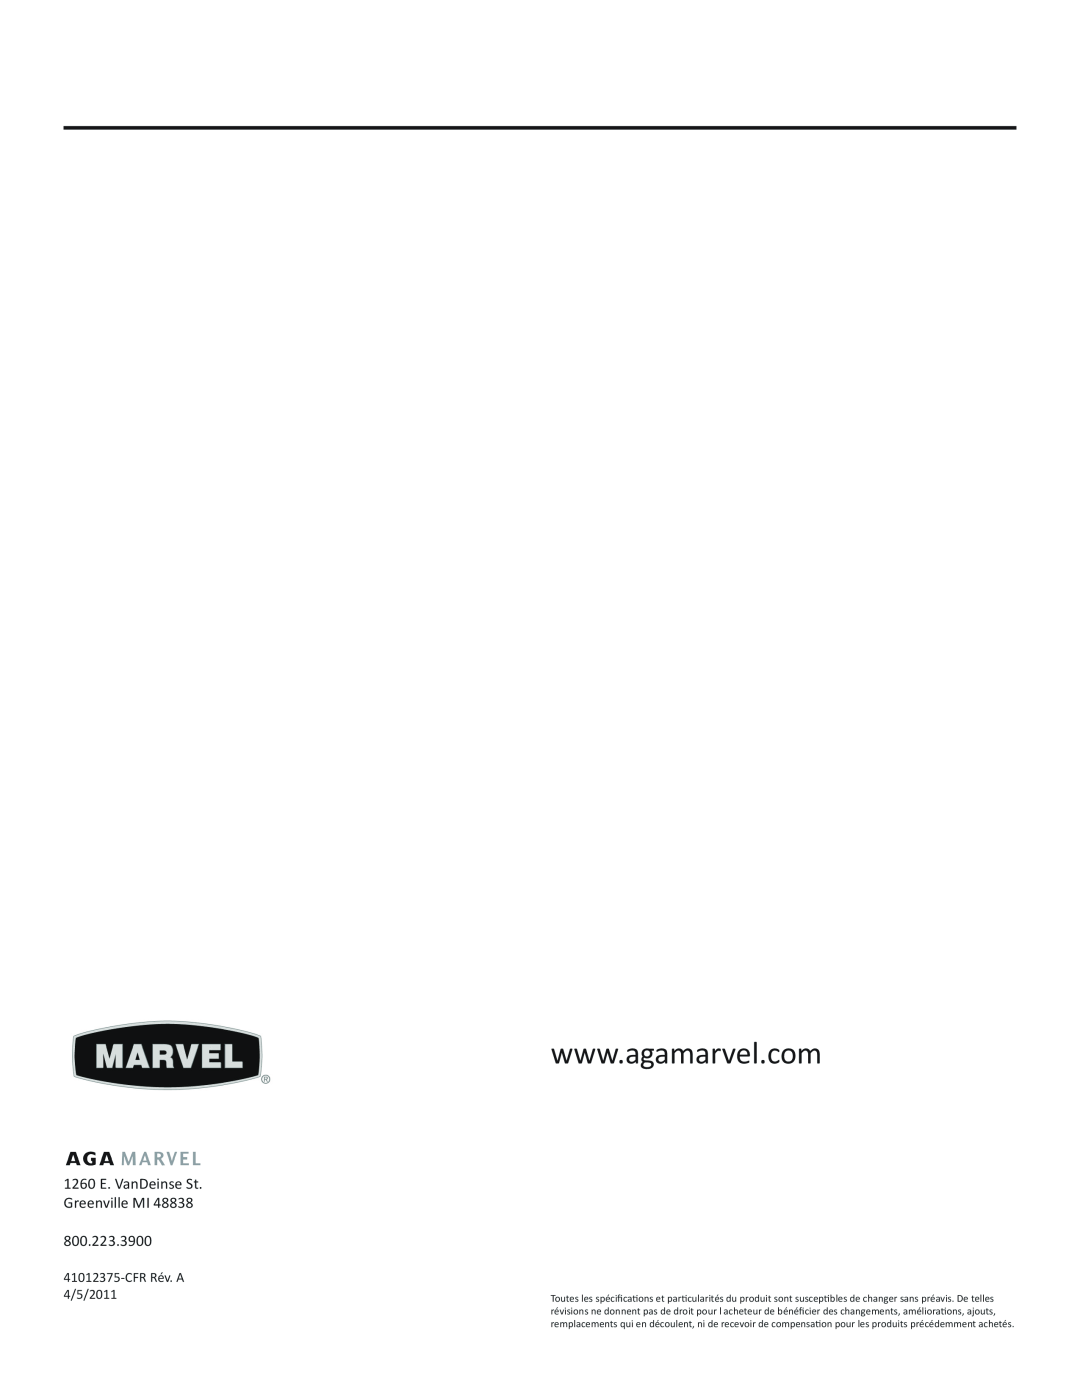 Marvel Group 6GARMP manual 1260 E. VanDeinse St. Greenville MI, CFR Rév. A 4/5/2011 